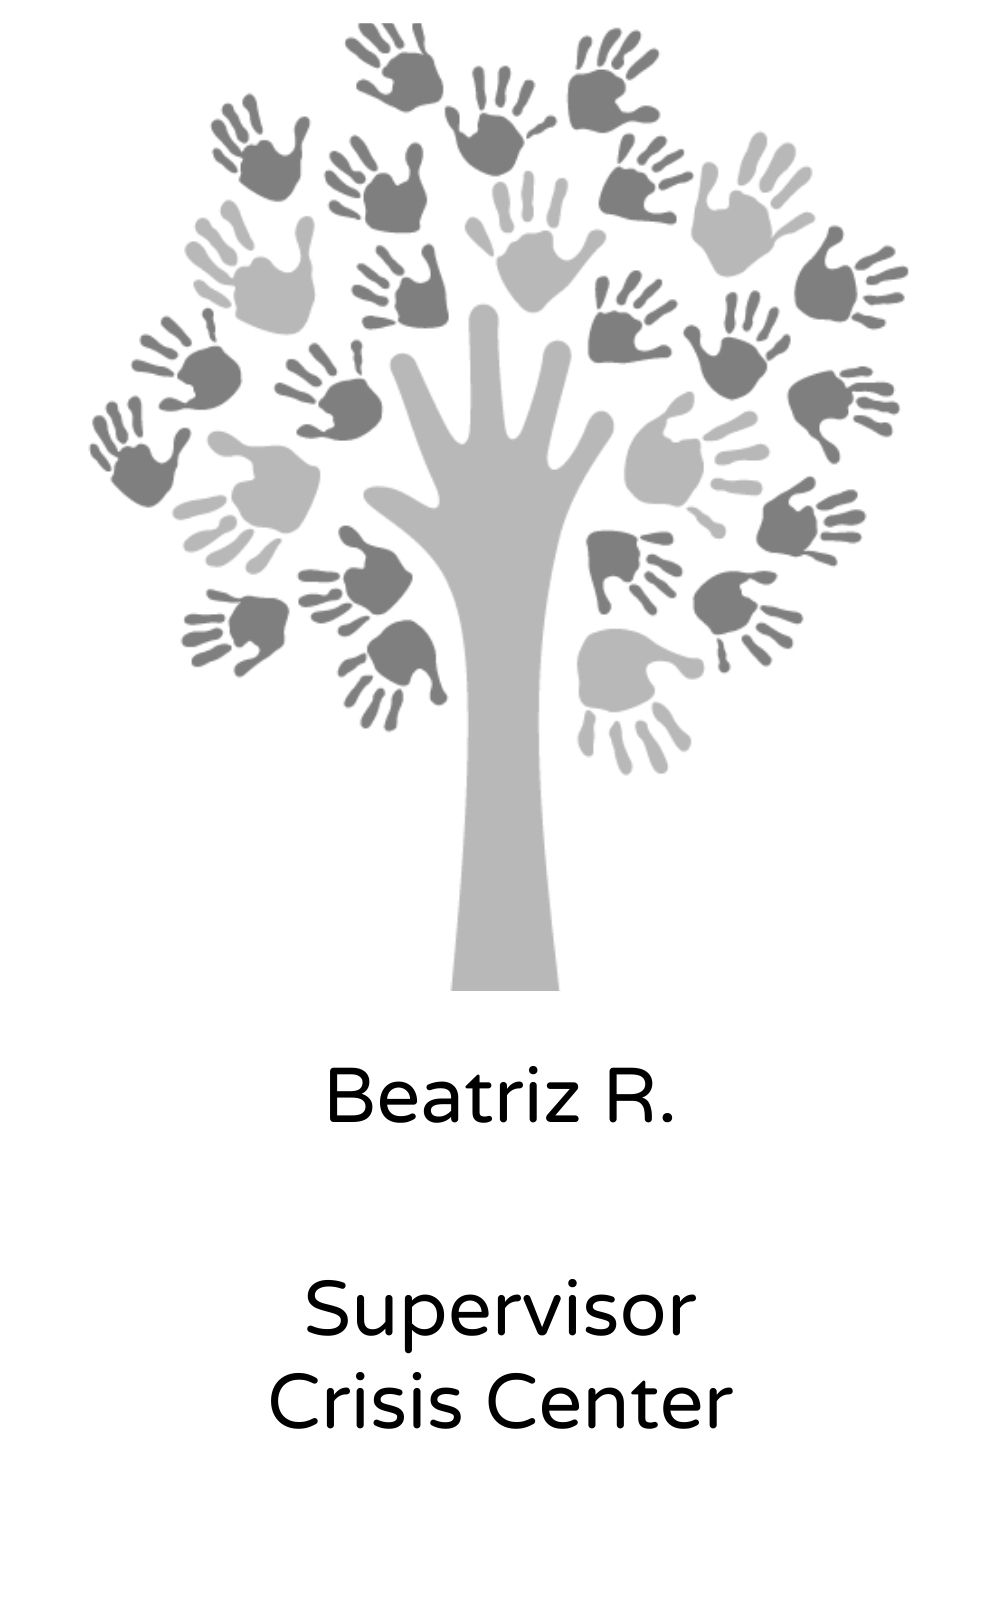 Beatriz R, Supervisor, Crisis Center